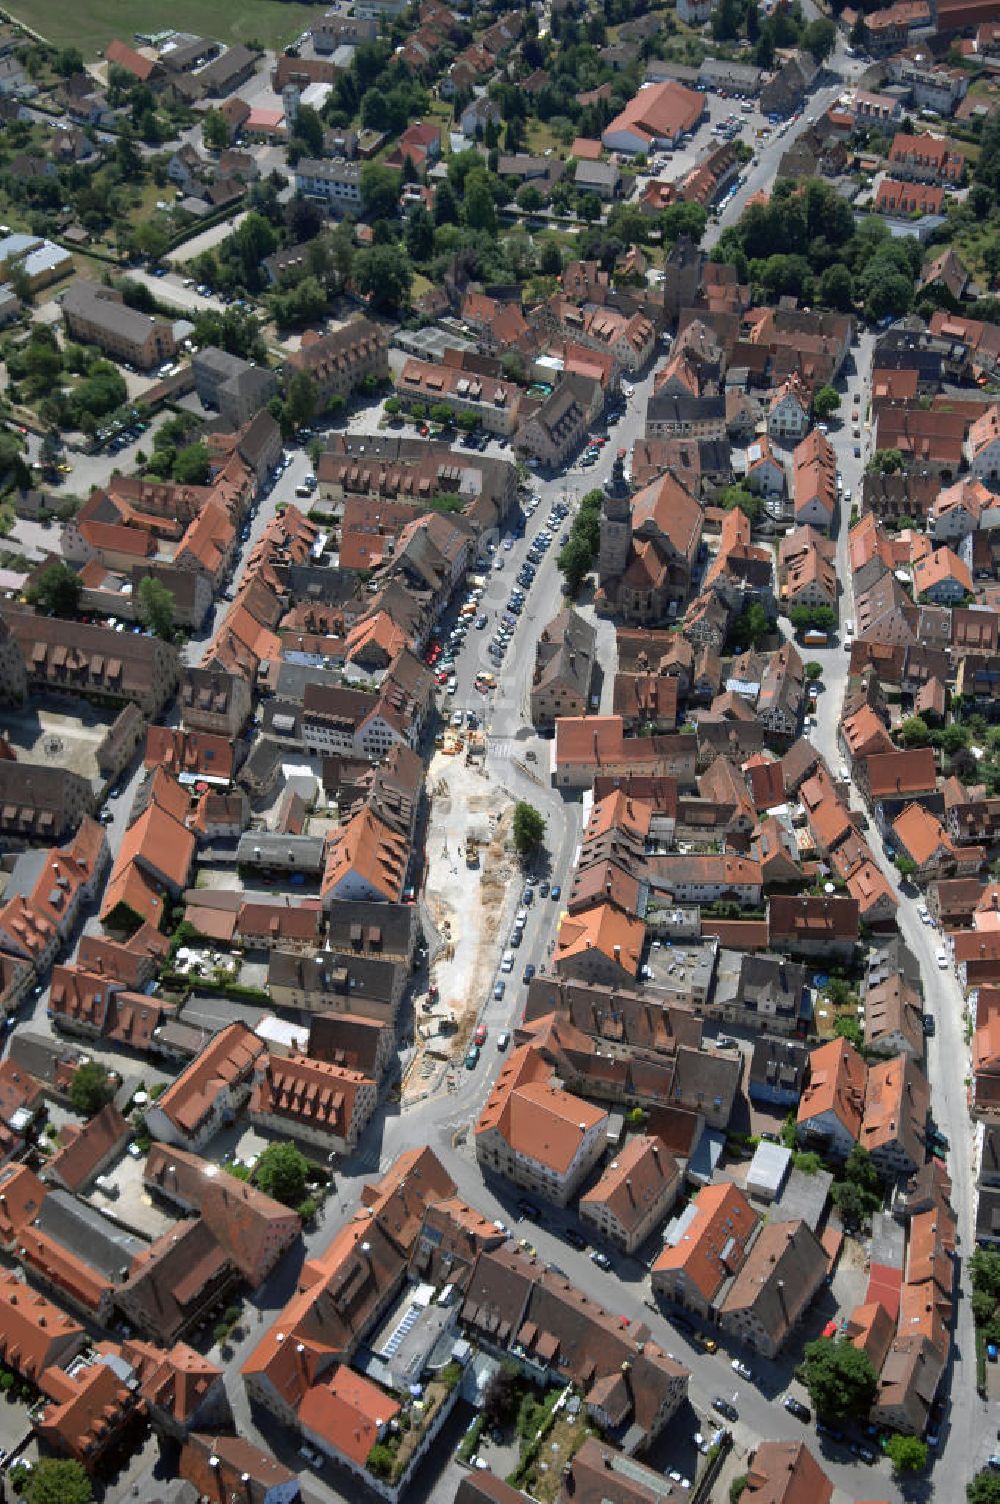 Luftbild Altdorf - Blick auf Altdorf bei Nürnberg